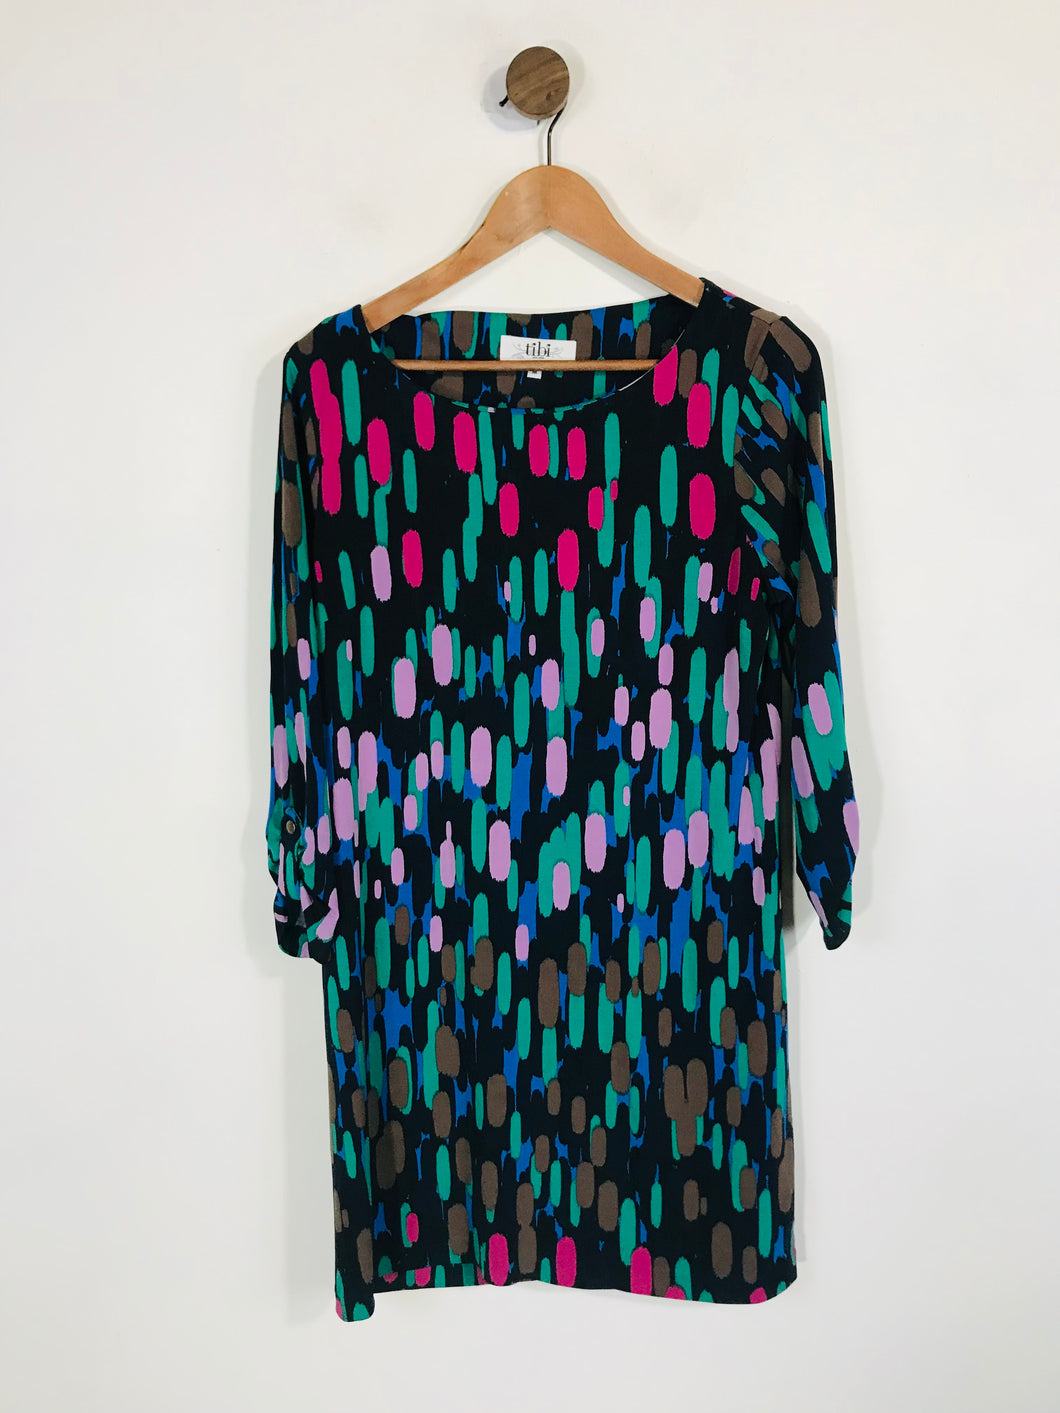 Tibi New York Women's Abstract Polka Dot Print Shift Dress | M UK10-12 | Multicoloured